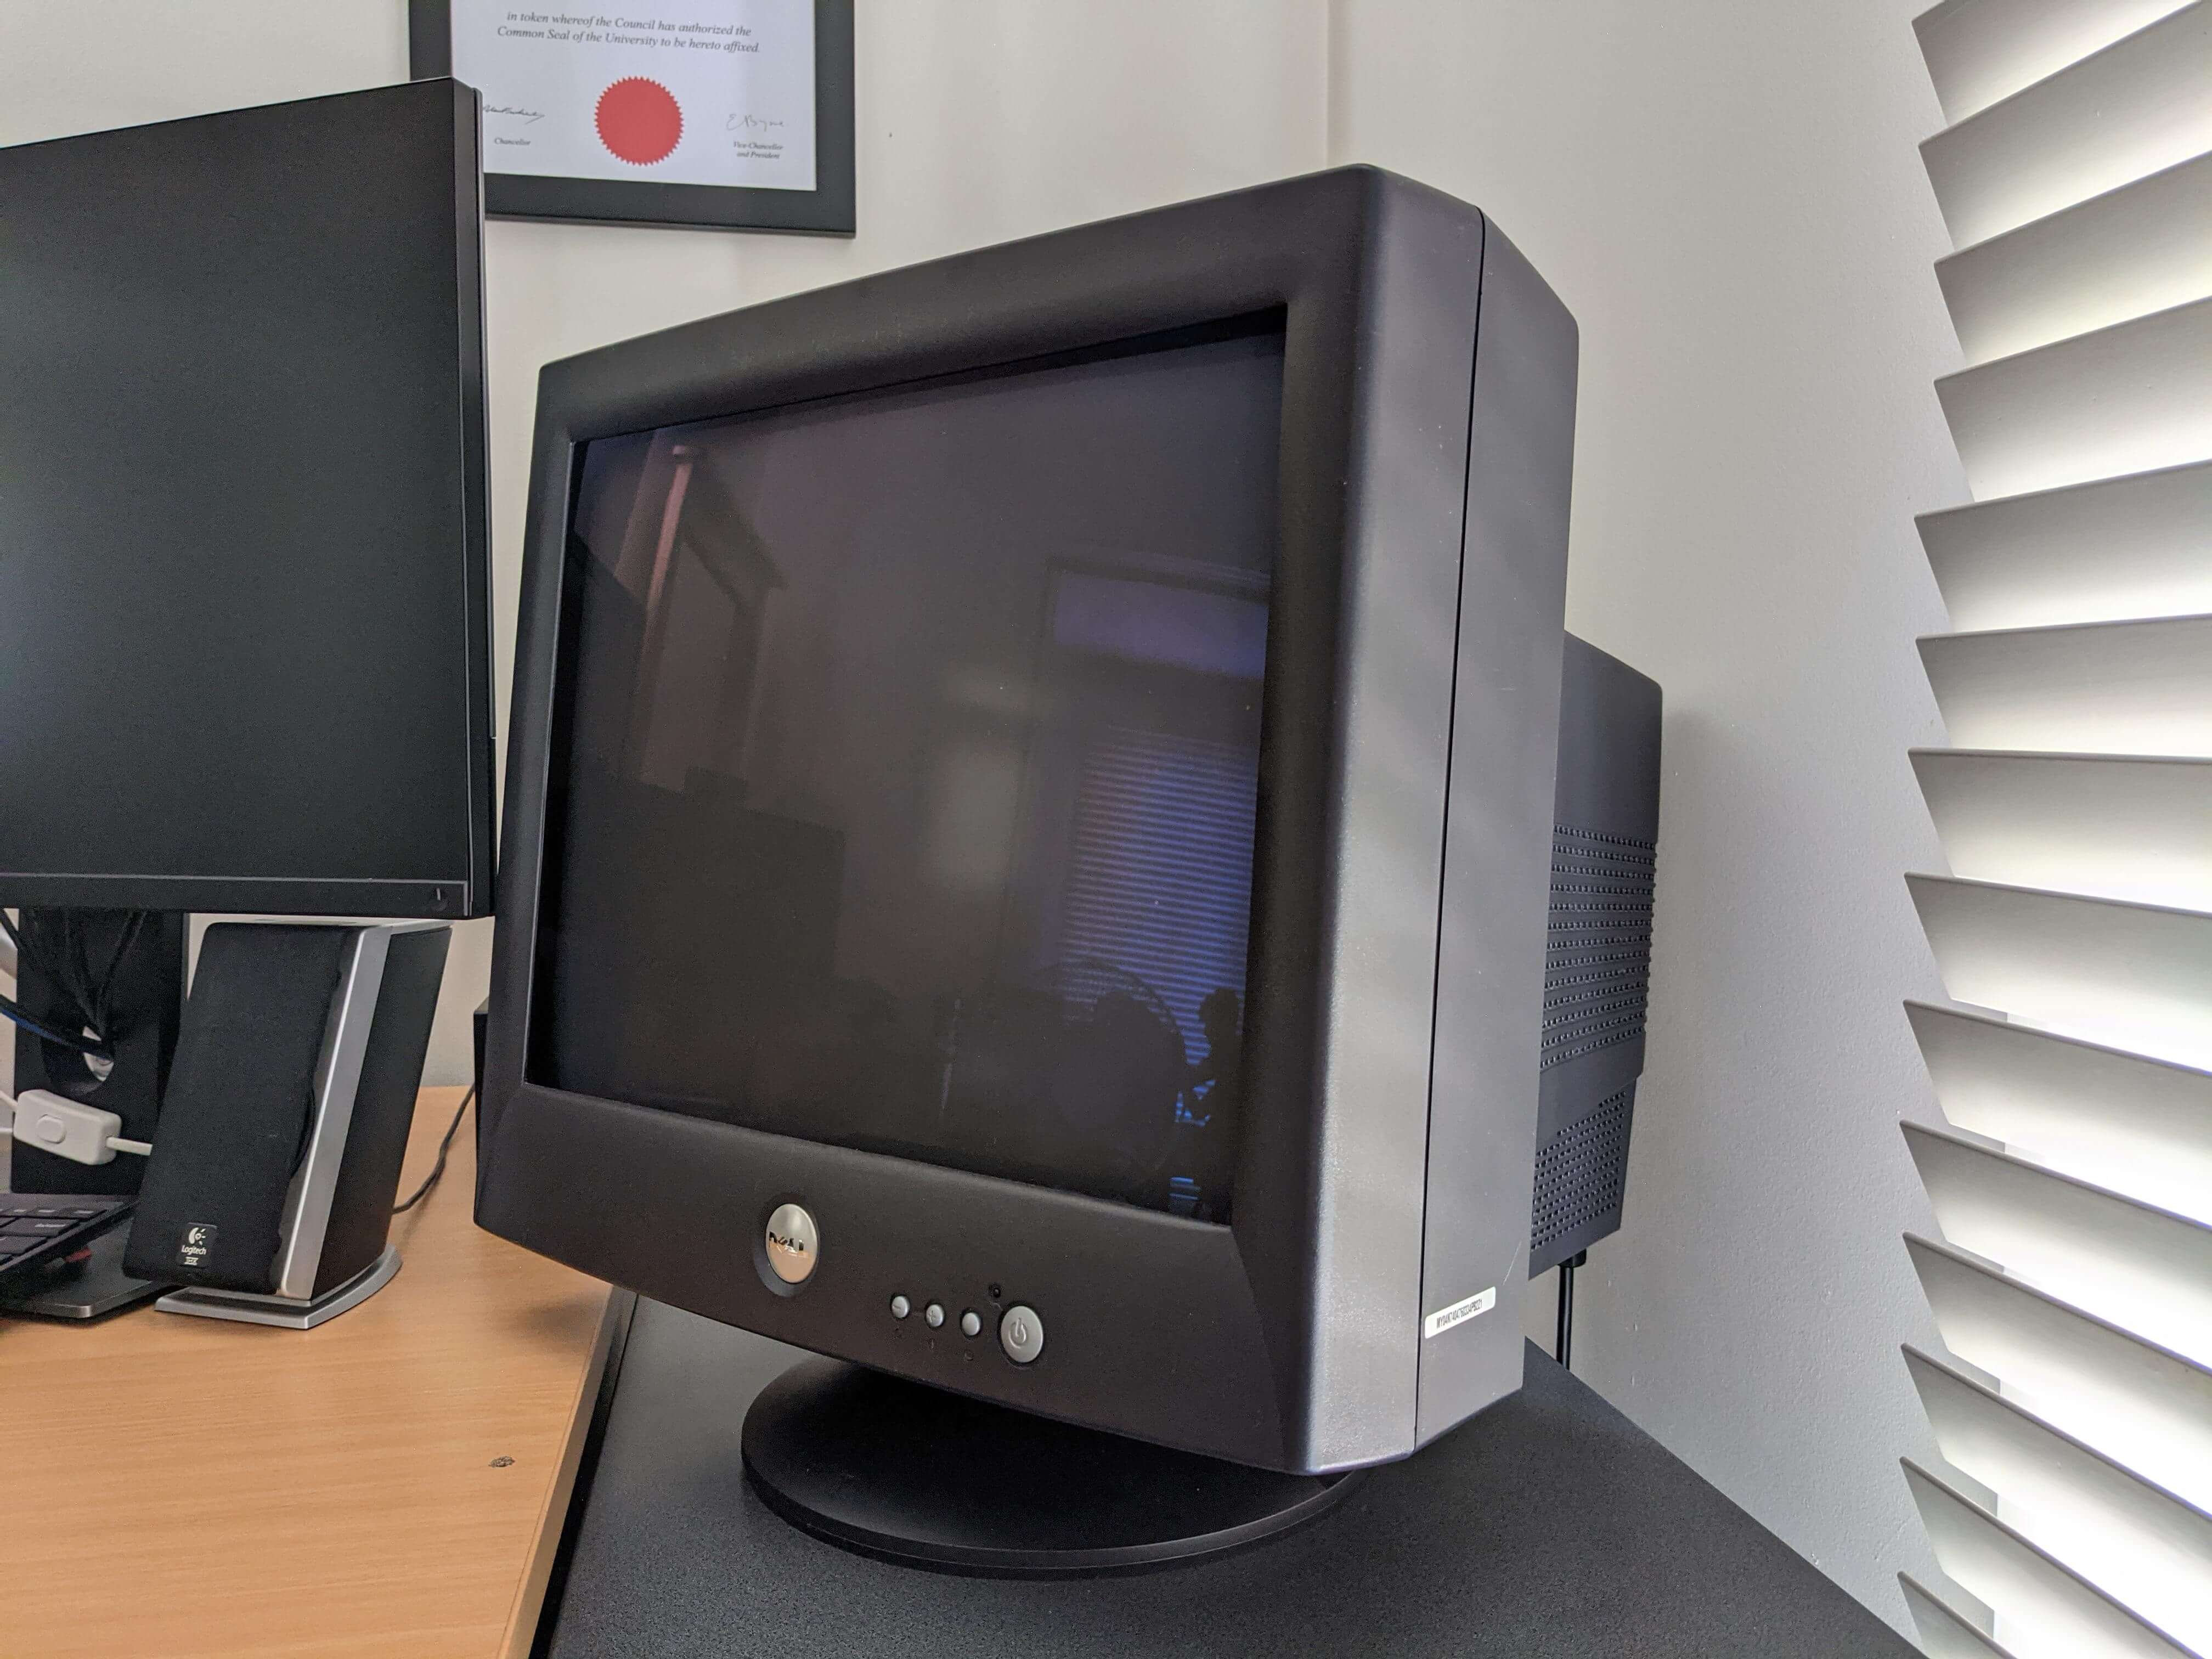 Dell M992 CRT monitor